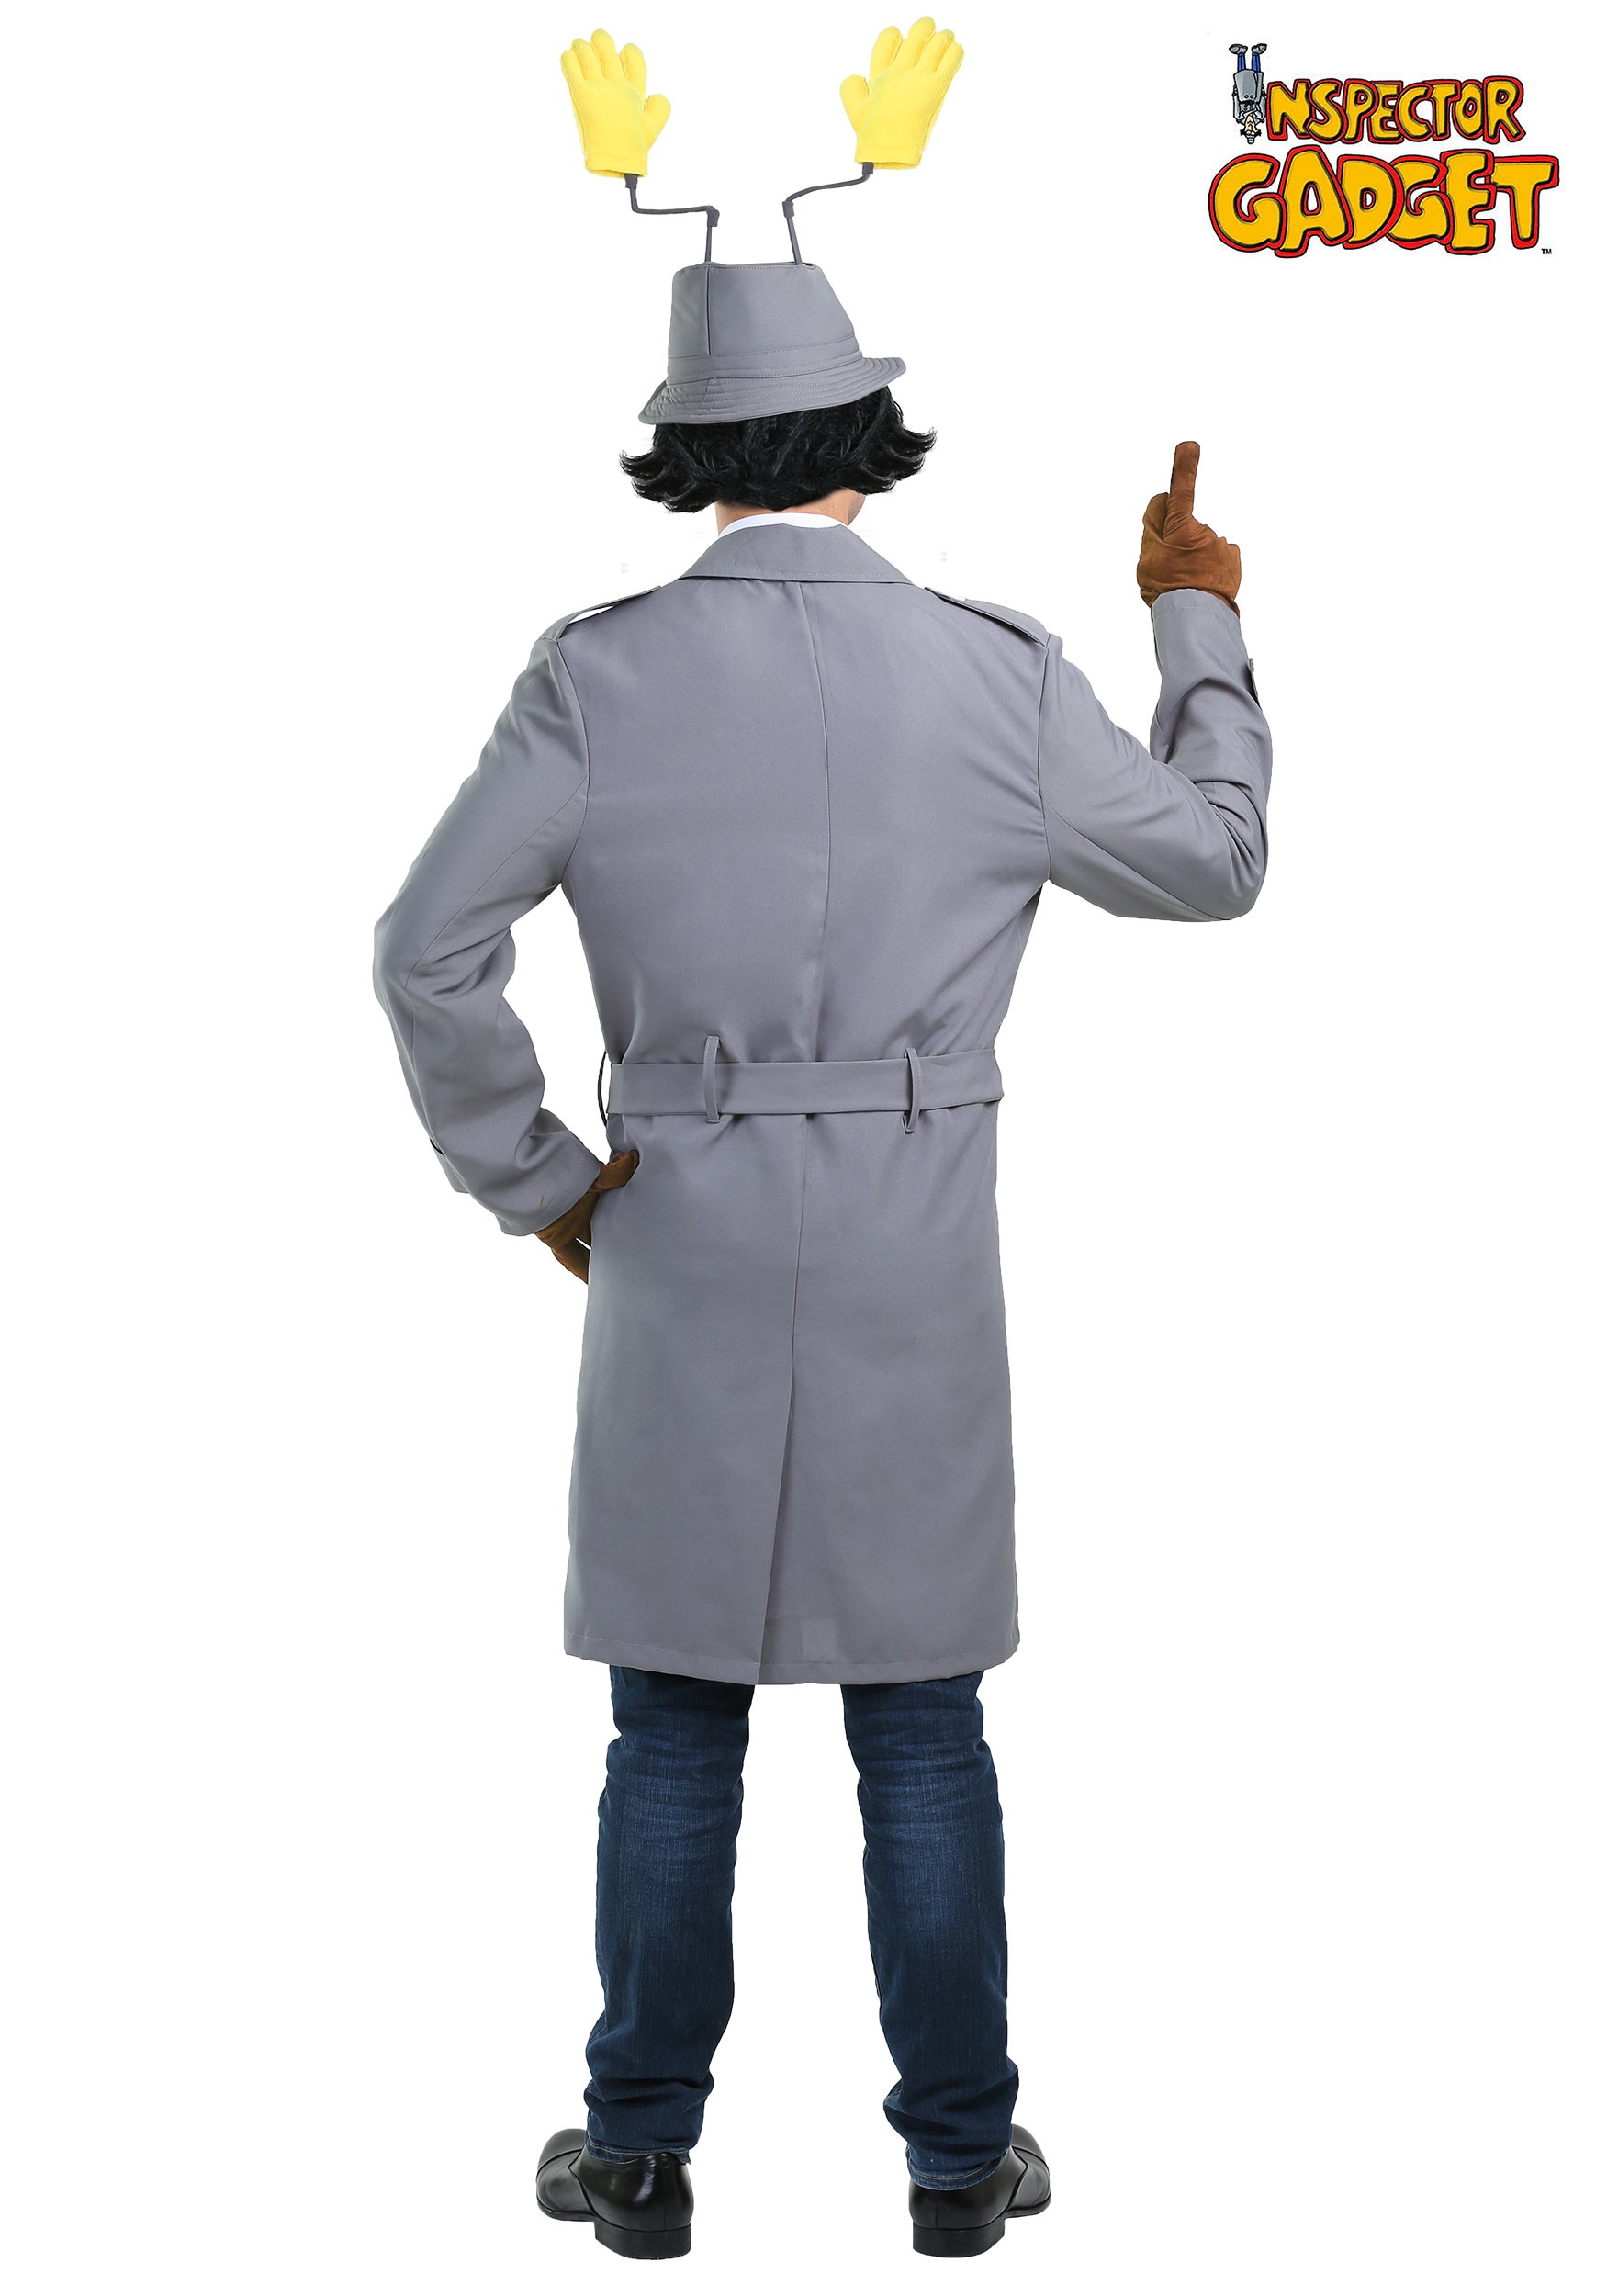 Plus Size Inspector Gadget Adult Costume